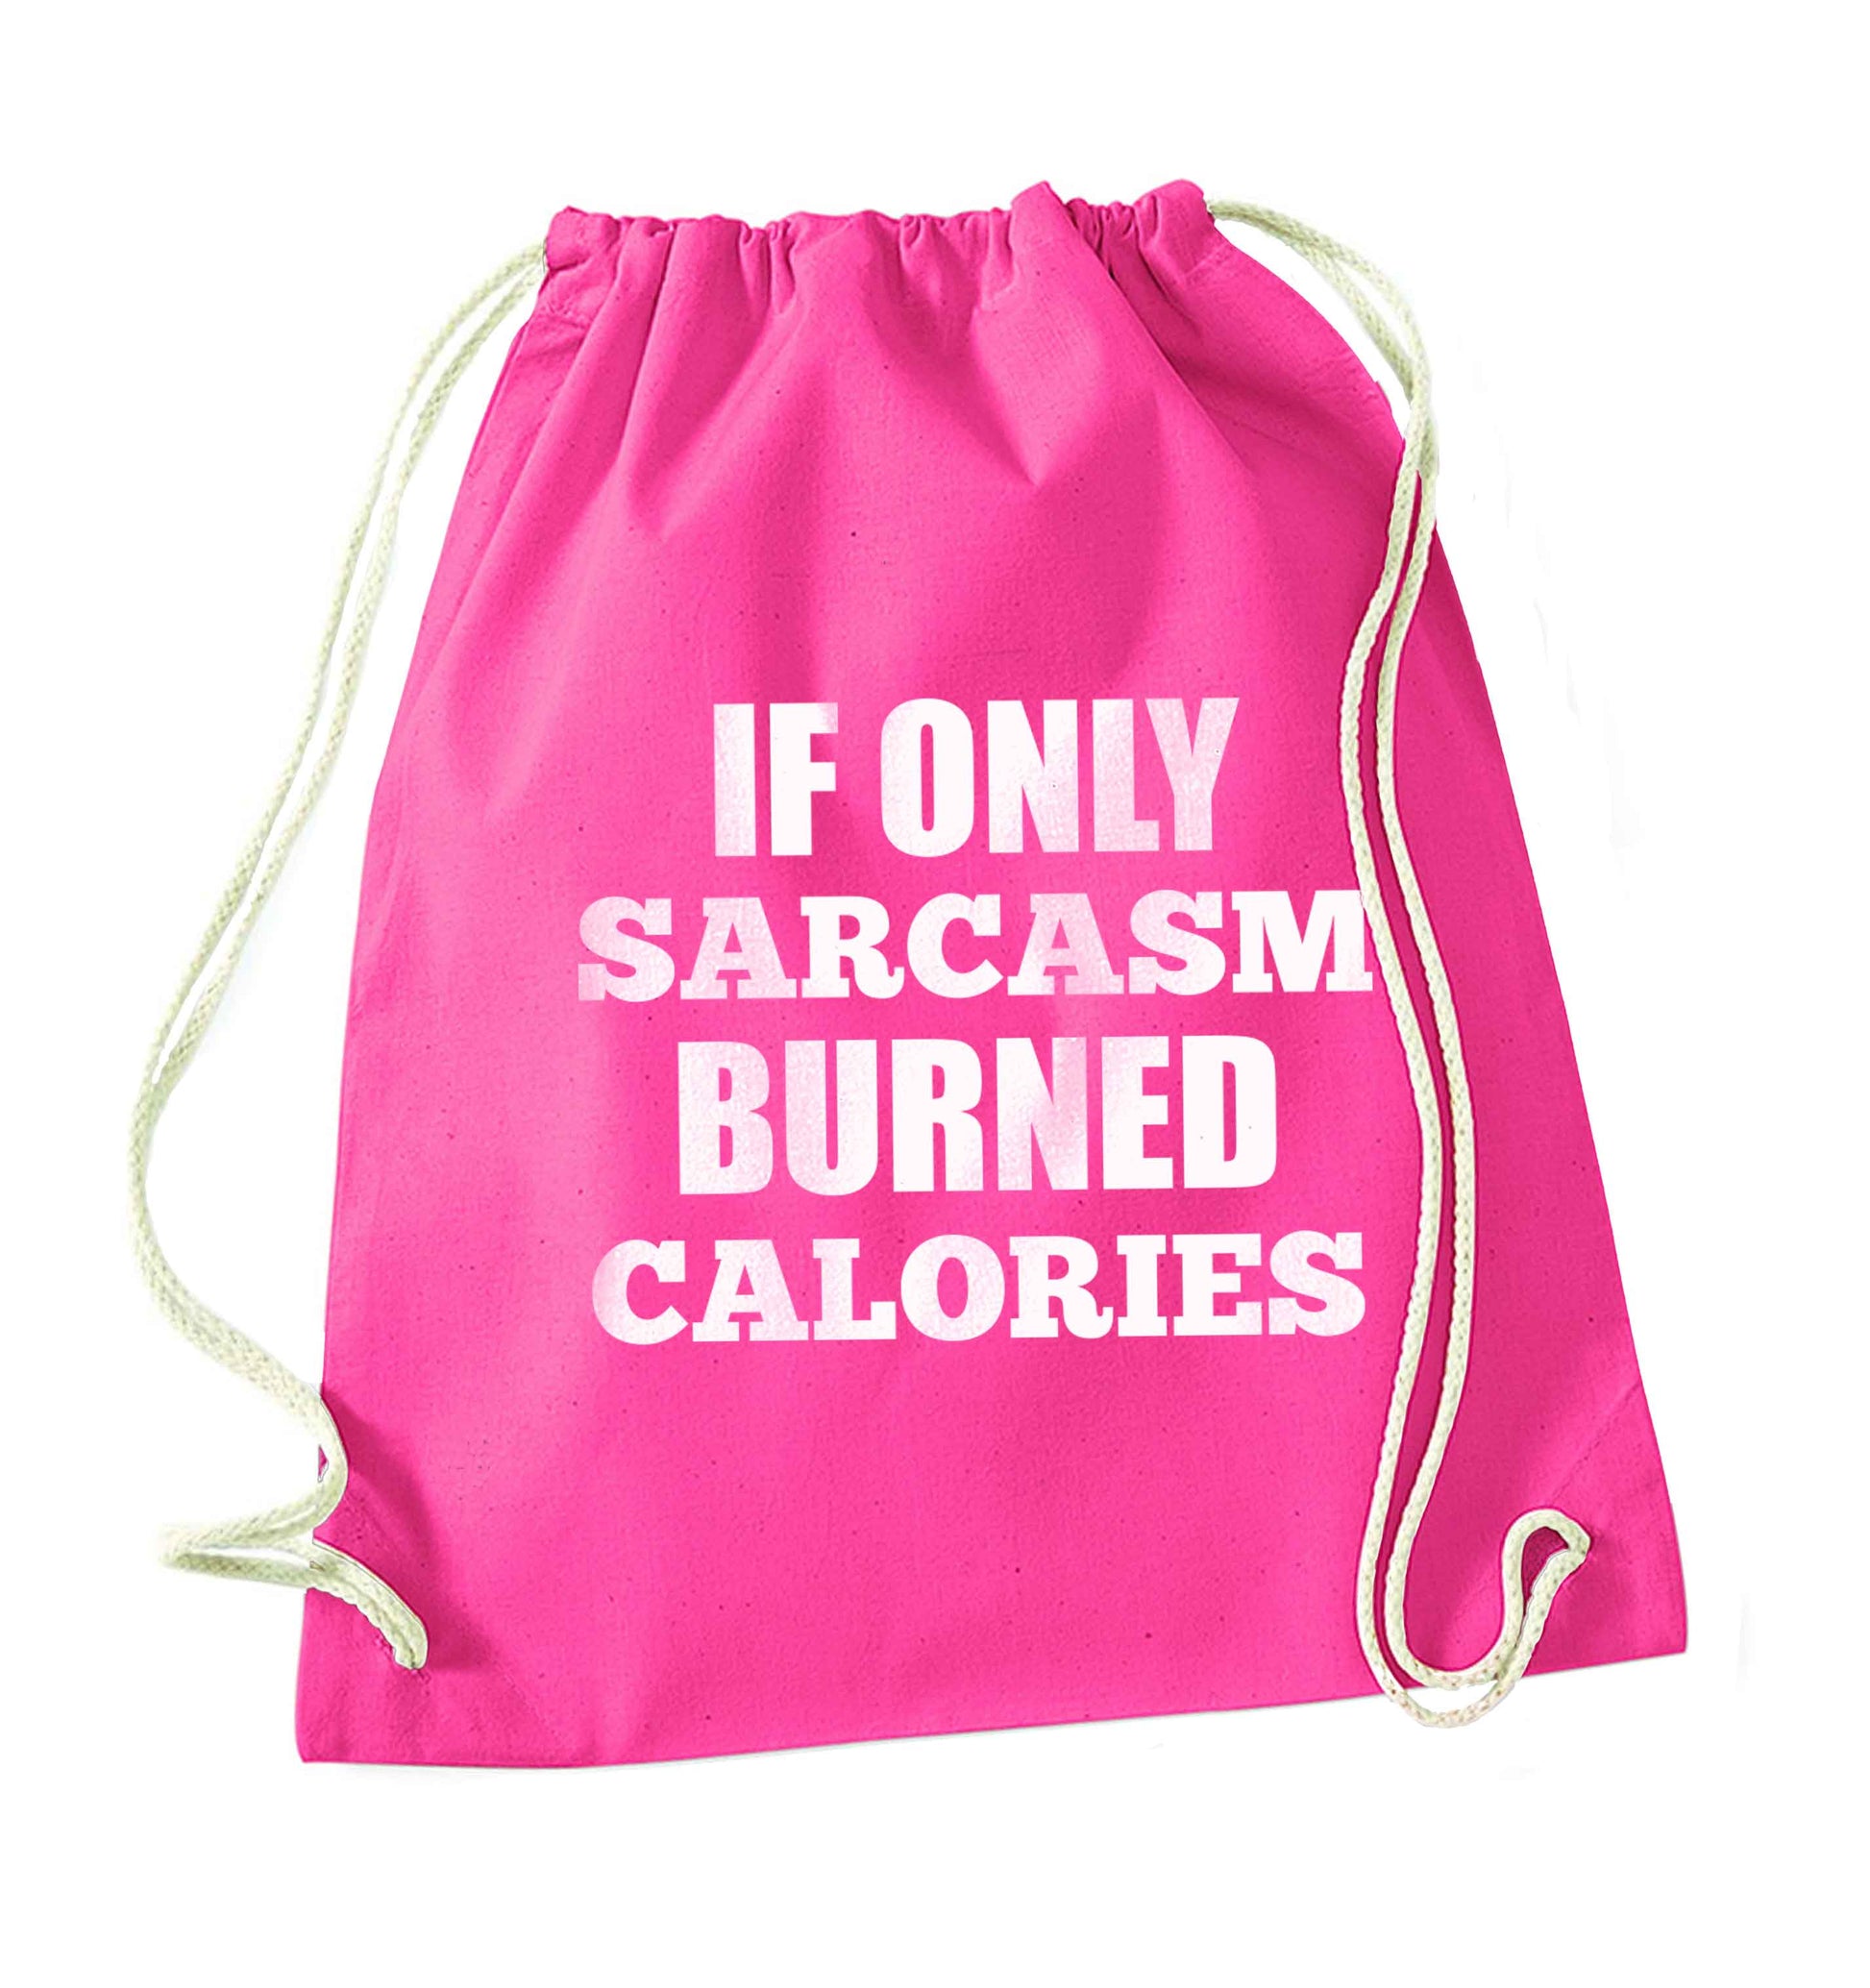 If only sarcasm burned calories pink drawstring bag